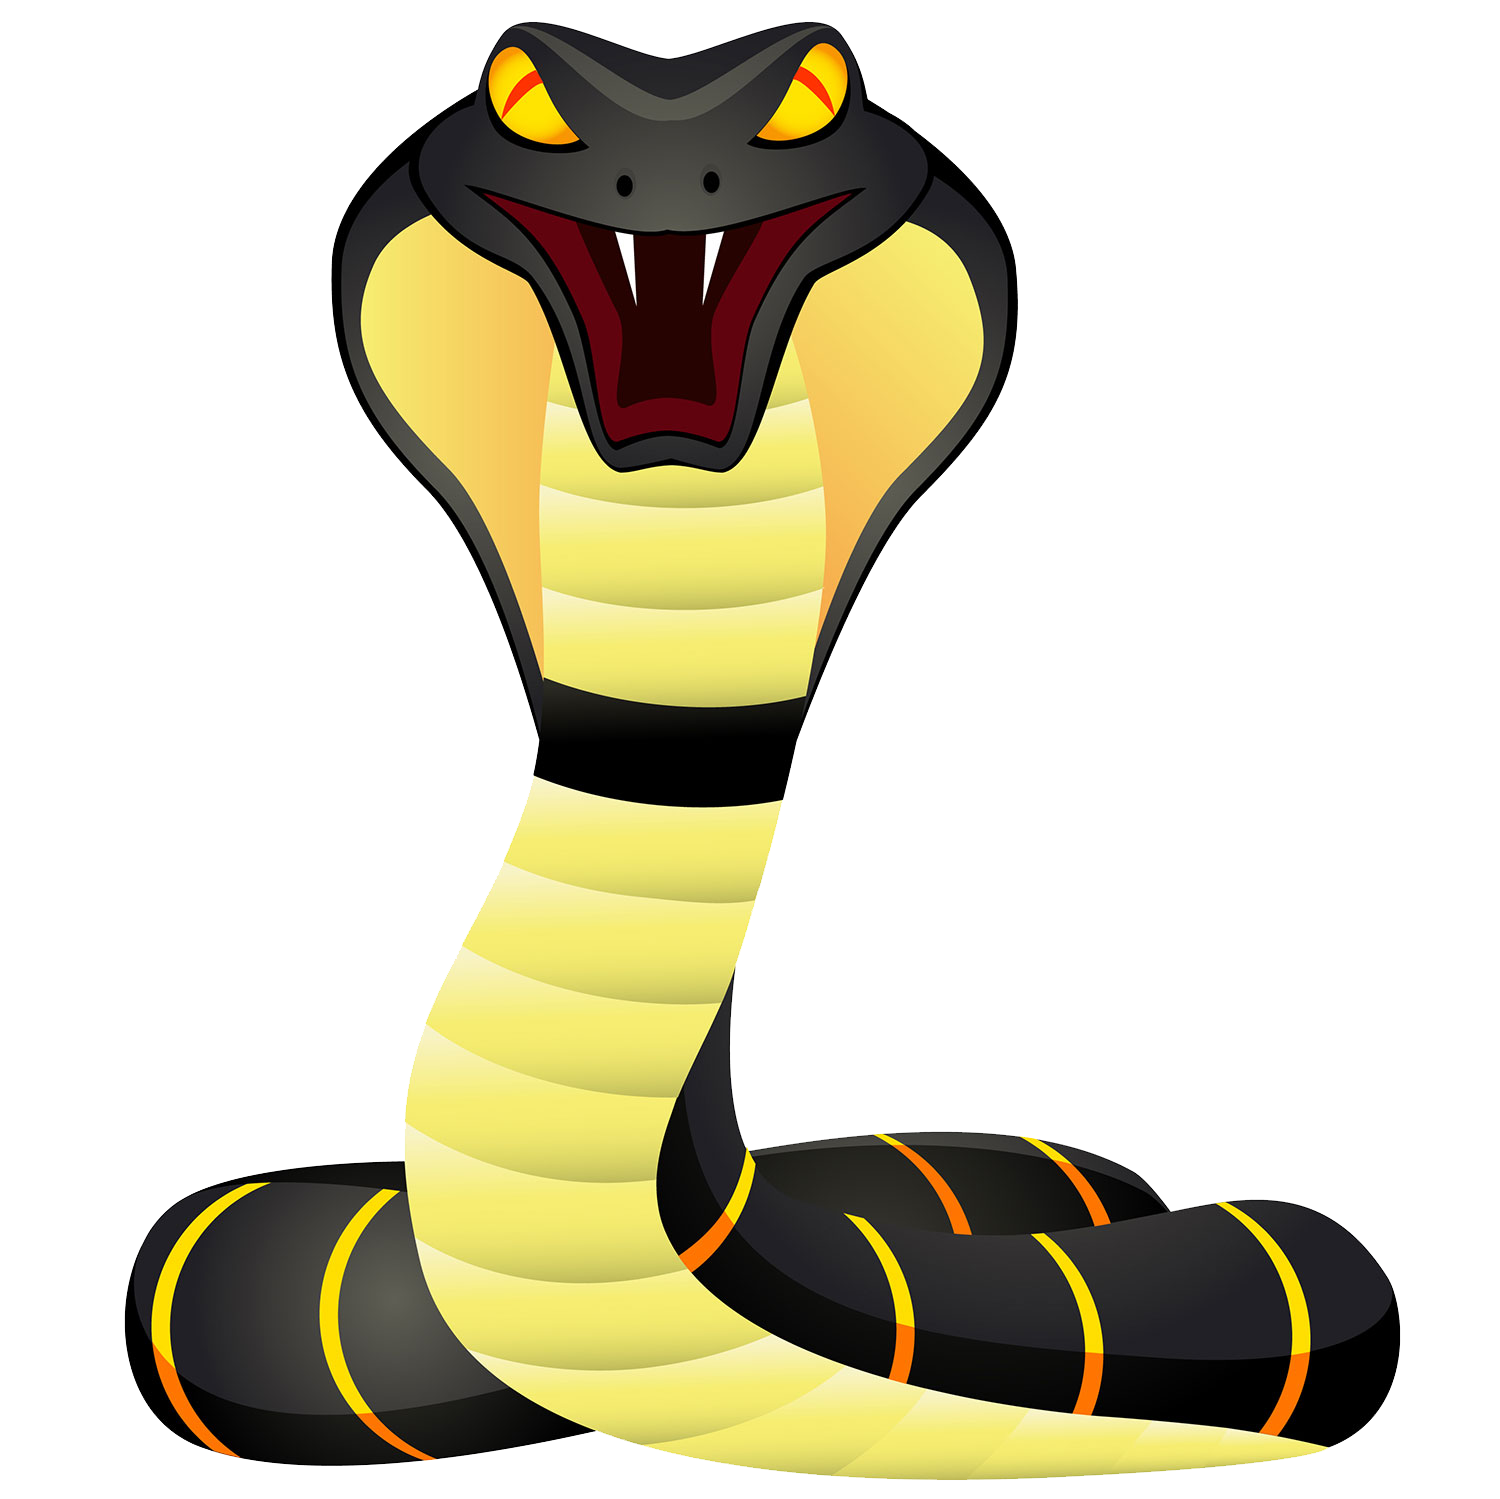 Cute Snake Image PNG Image